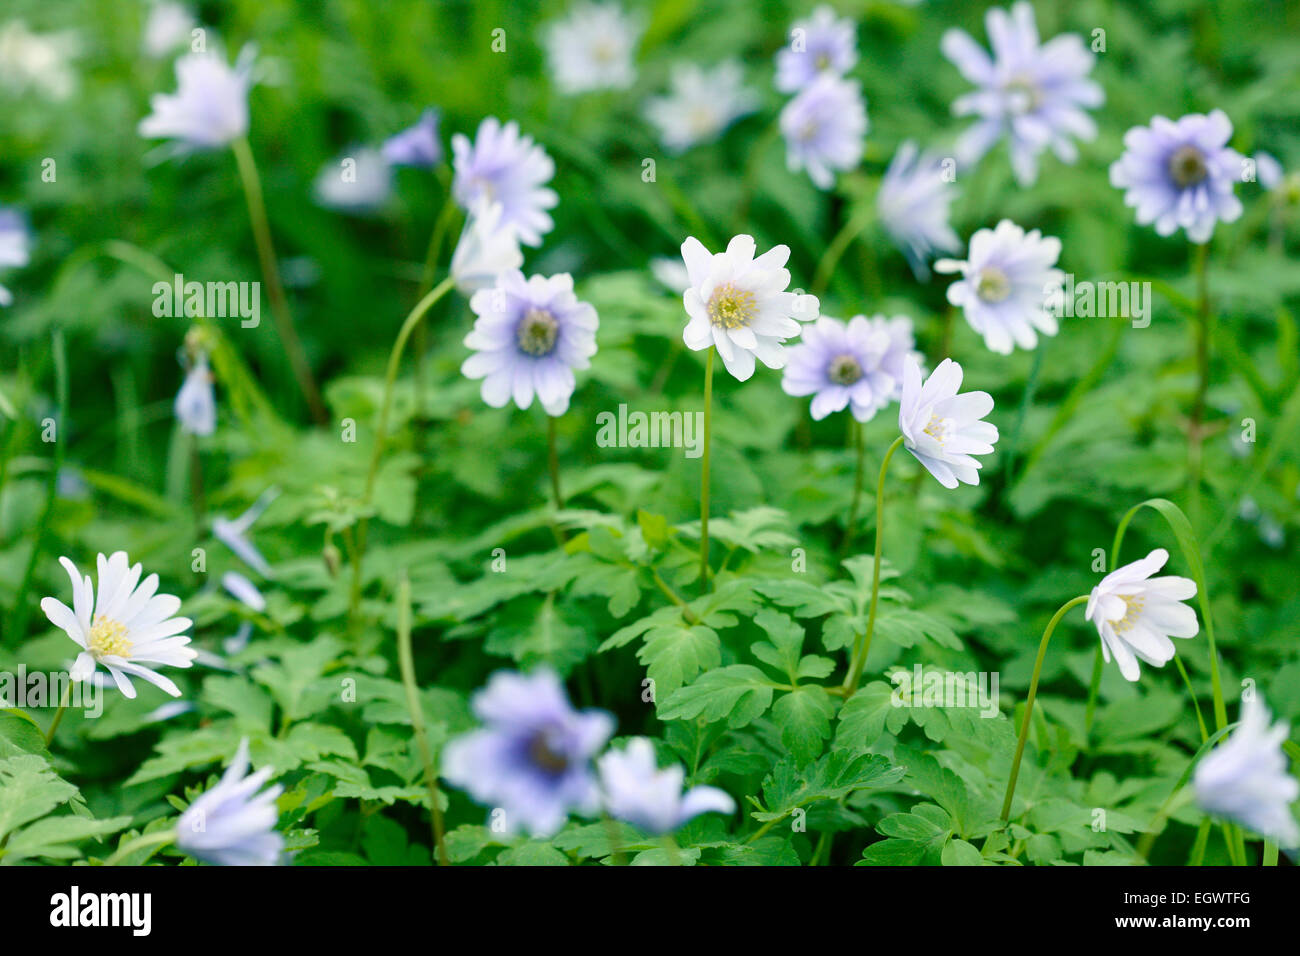 Early flowering Anemone Blanda blue, beautiful Daisy-like Spring flowers Jane Ann Butler Photography JABP731 Stock Photo